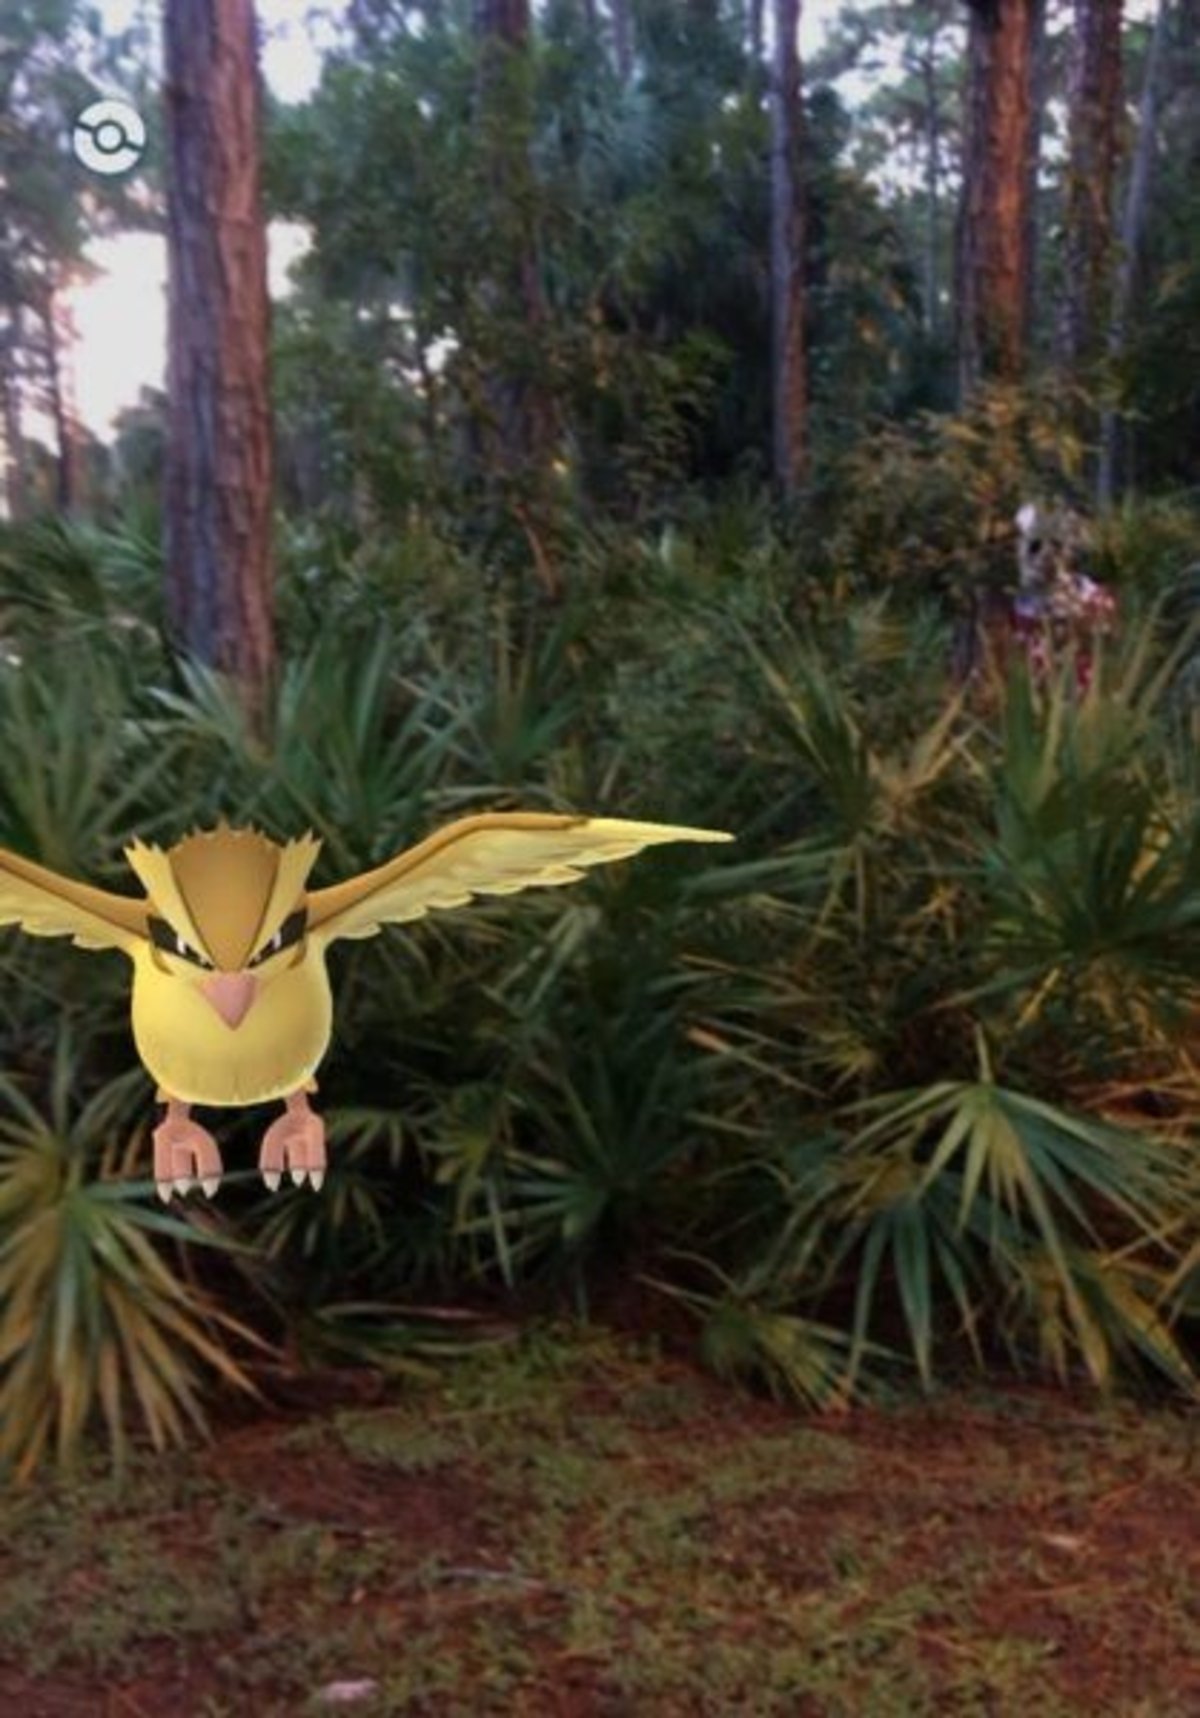 Pokémon GO: Un escalofriante payaso acecha a los jugadores en Florida